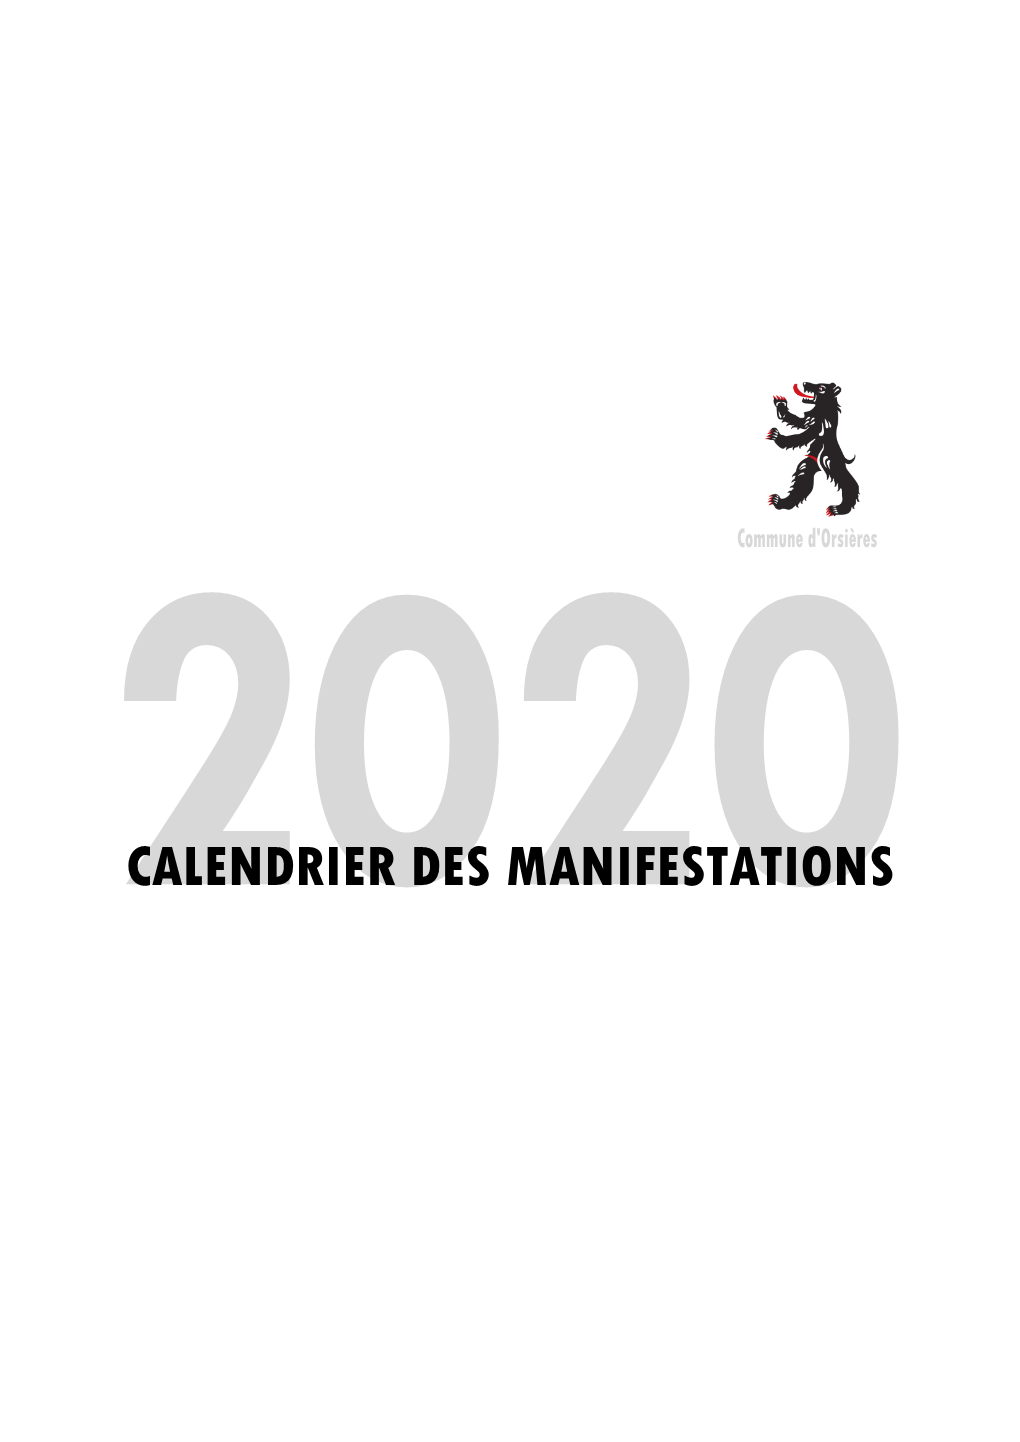 Calendrier Des Manifestations 2007